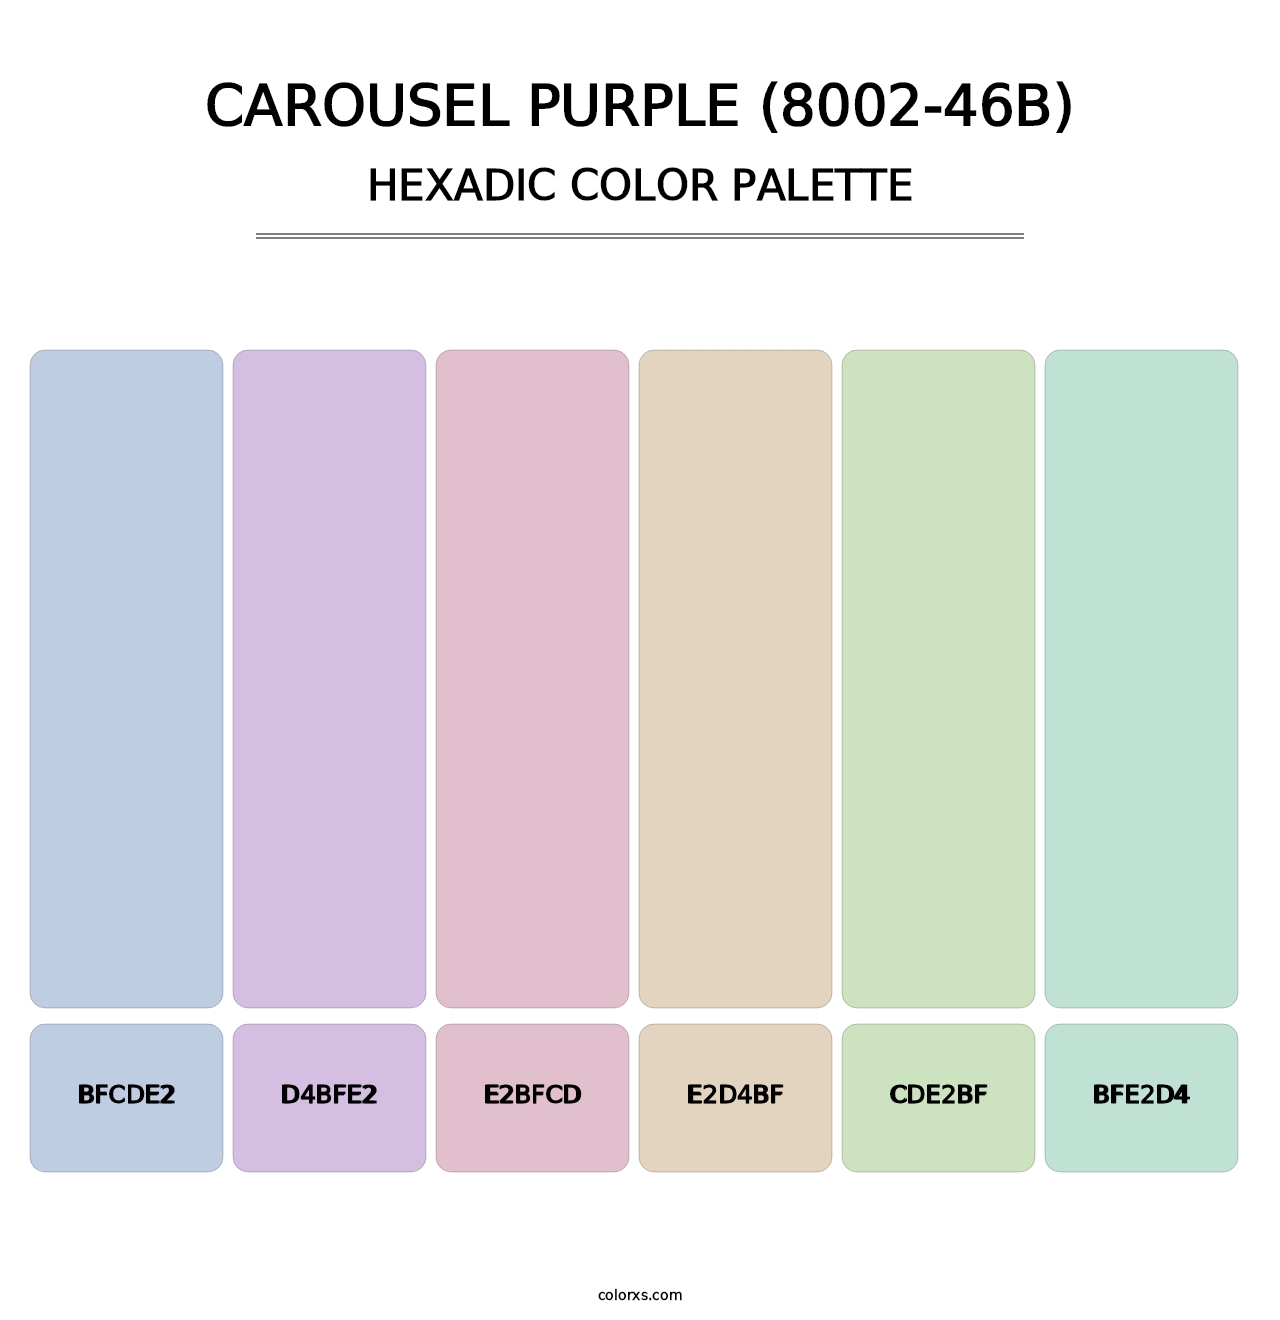 Carousel Purple (8002-46B) - Hexadic Color Palette